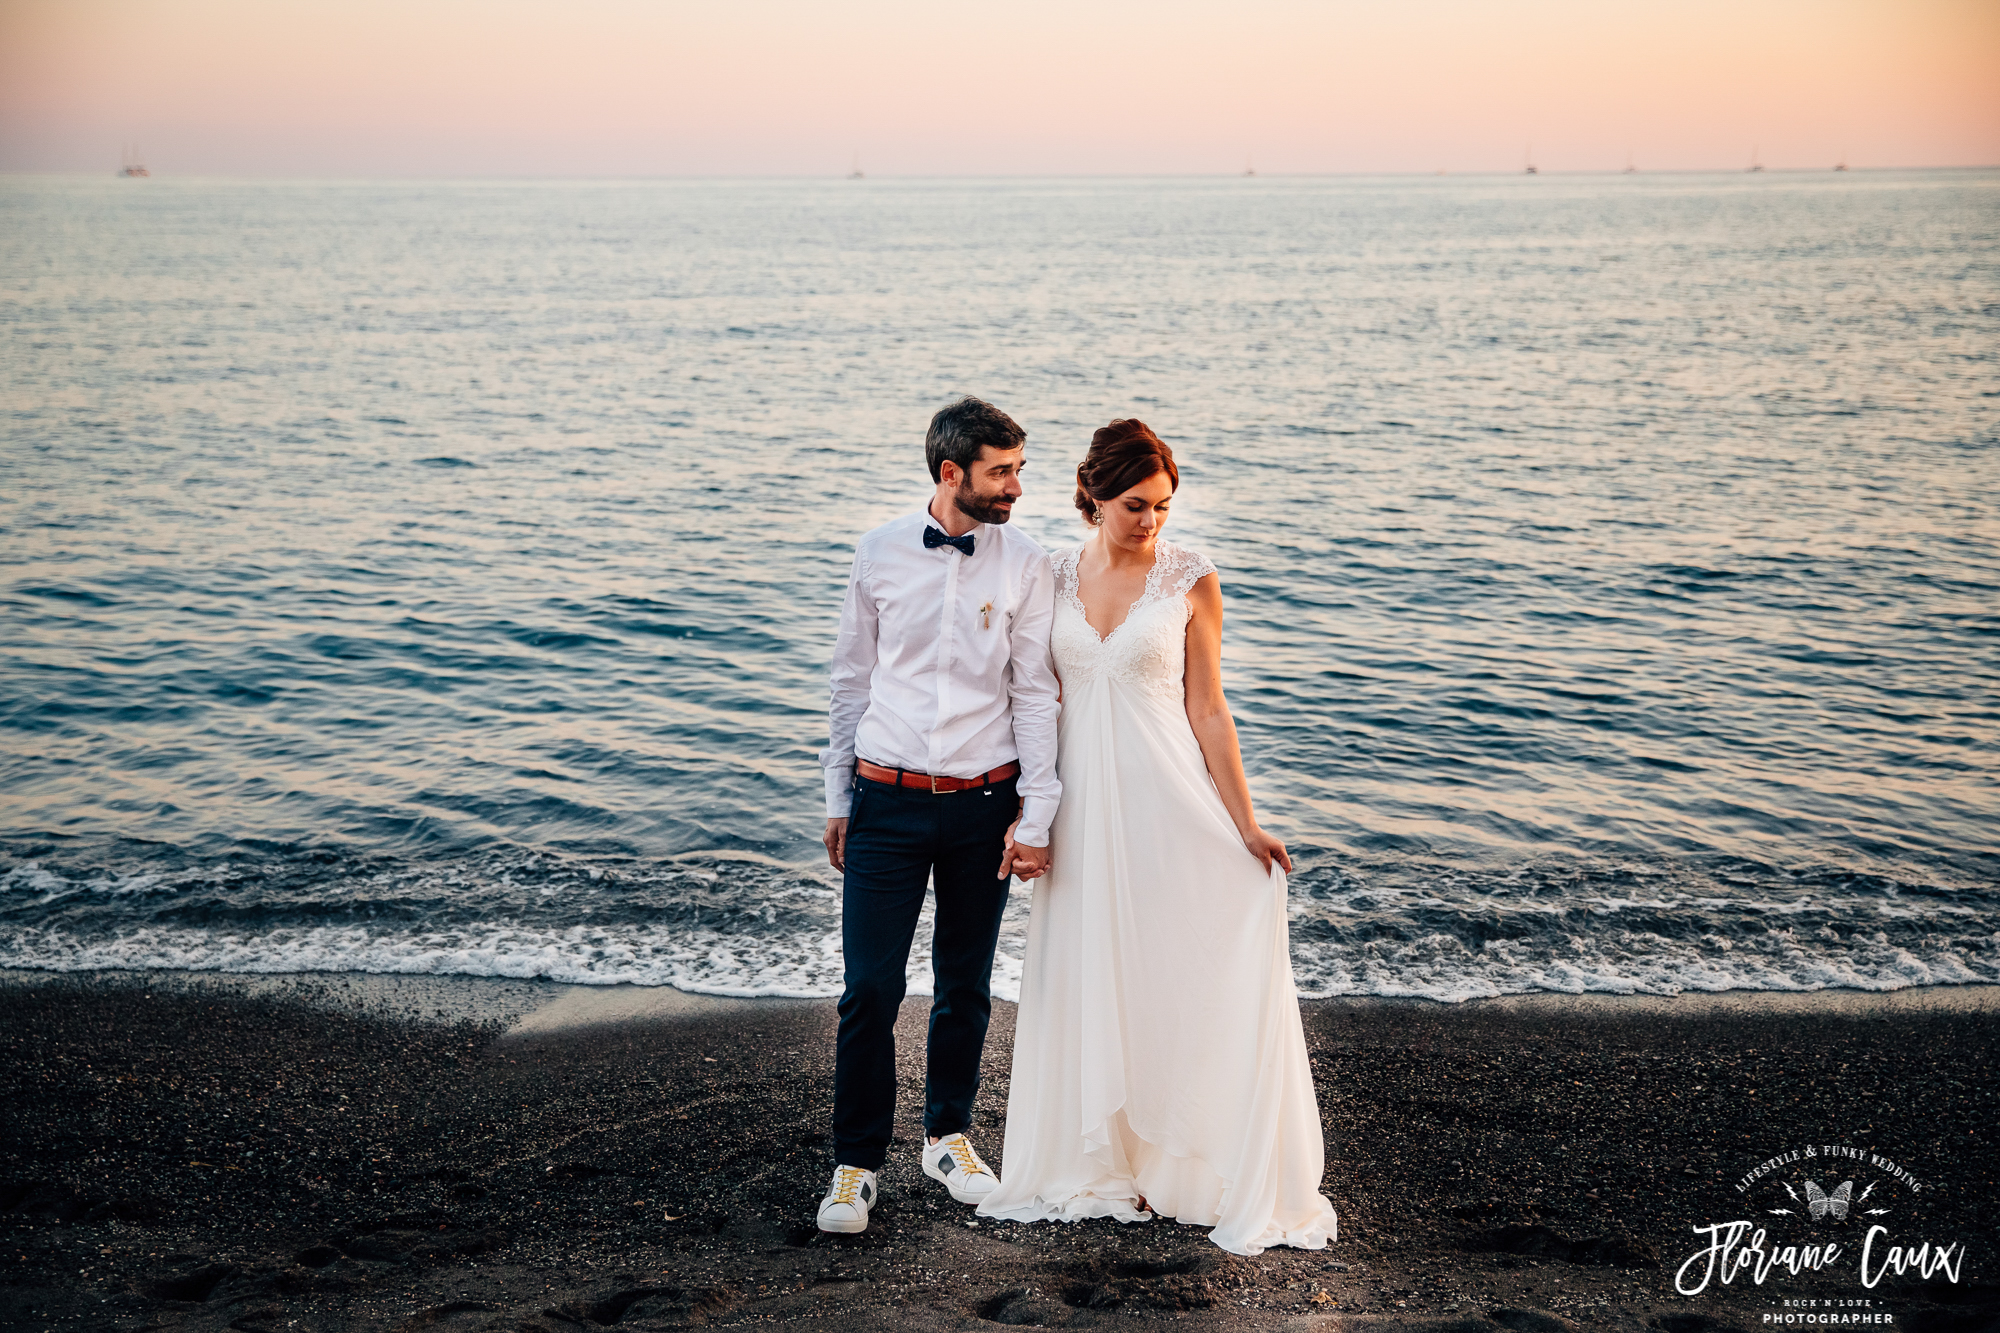 photographe-mariage-Santorin-oia-coucher-de-soleil-Floriane-Caux (26)